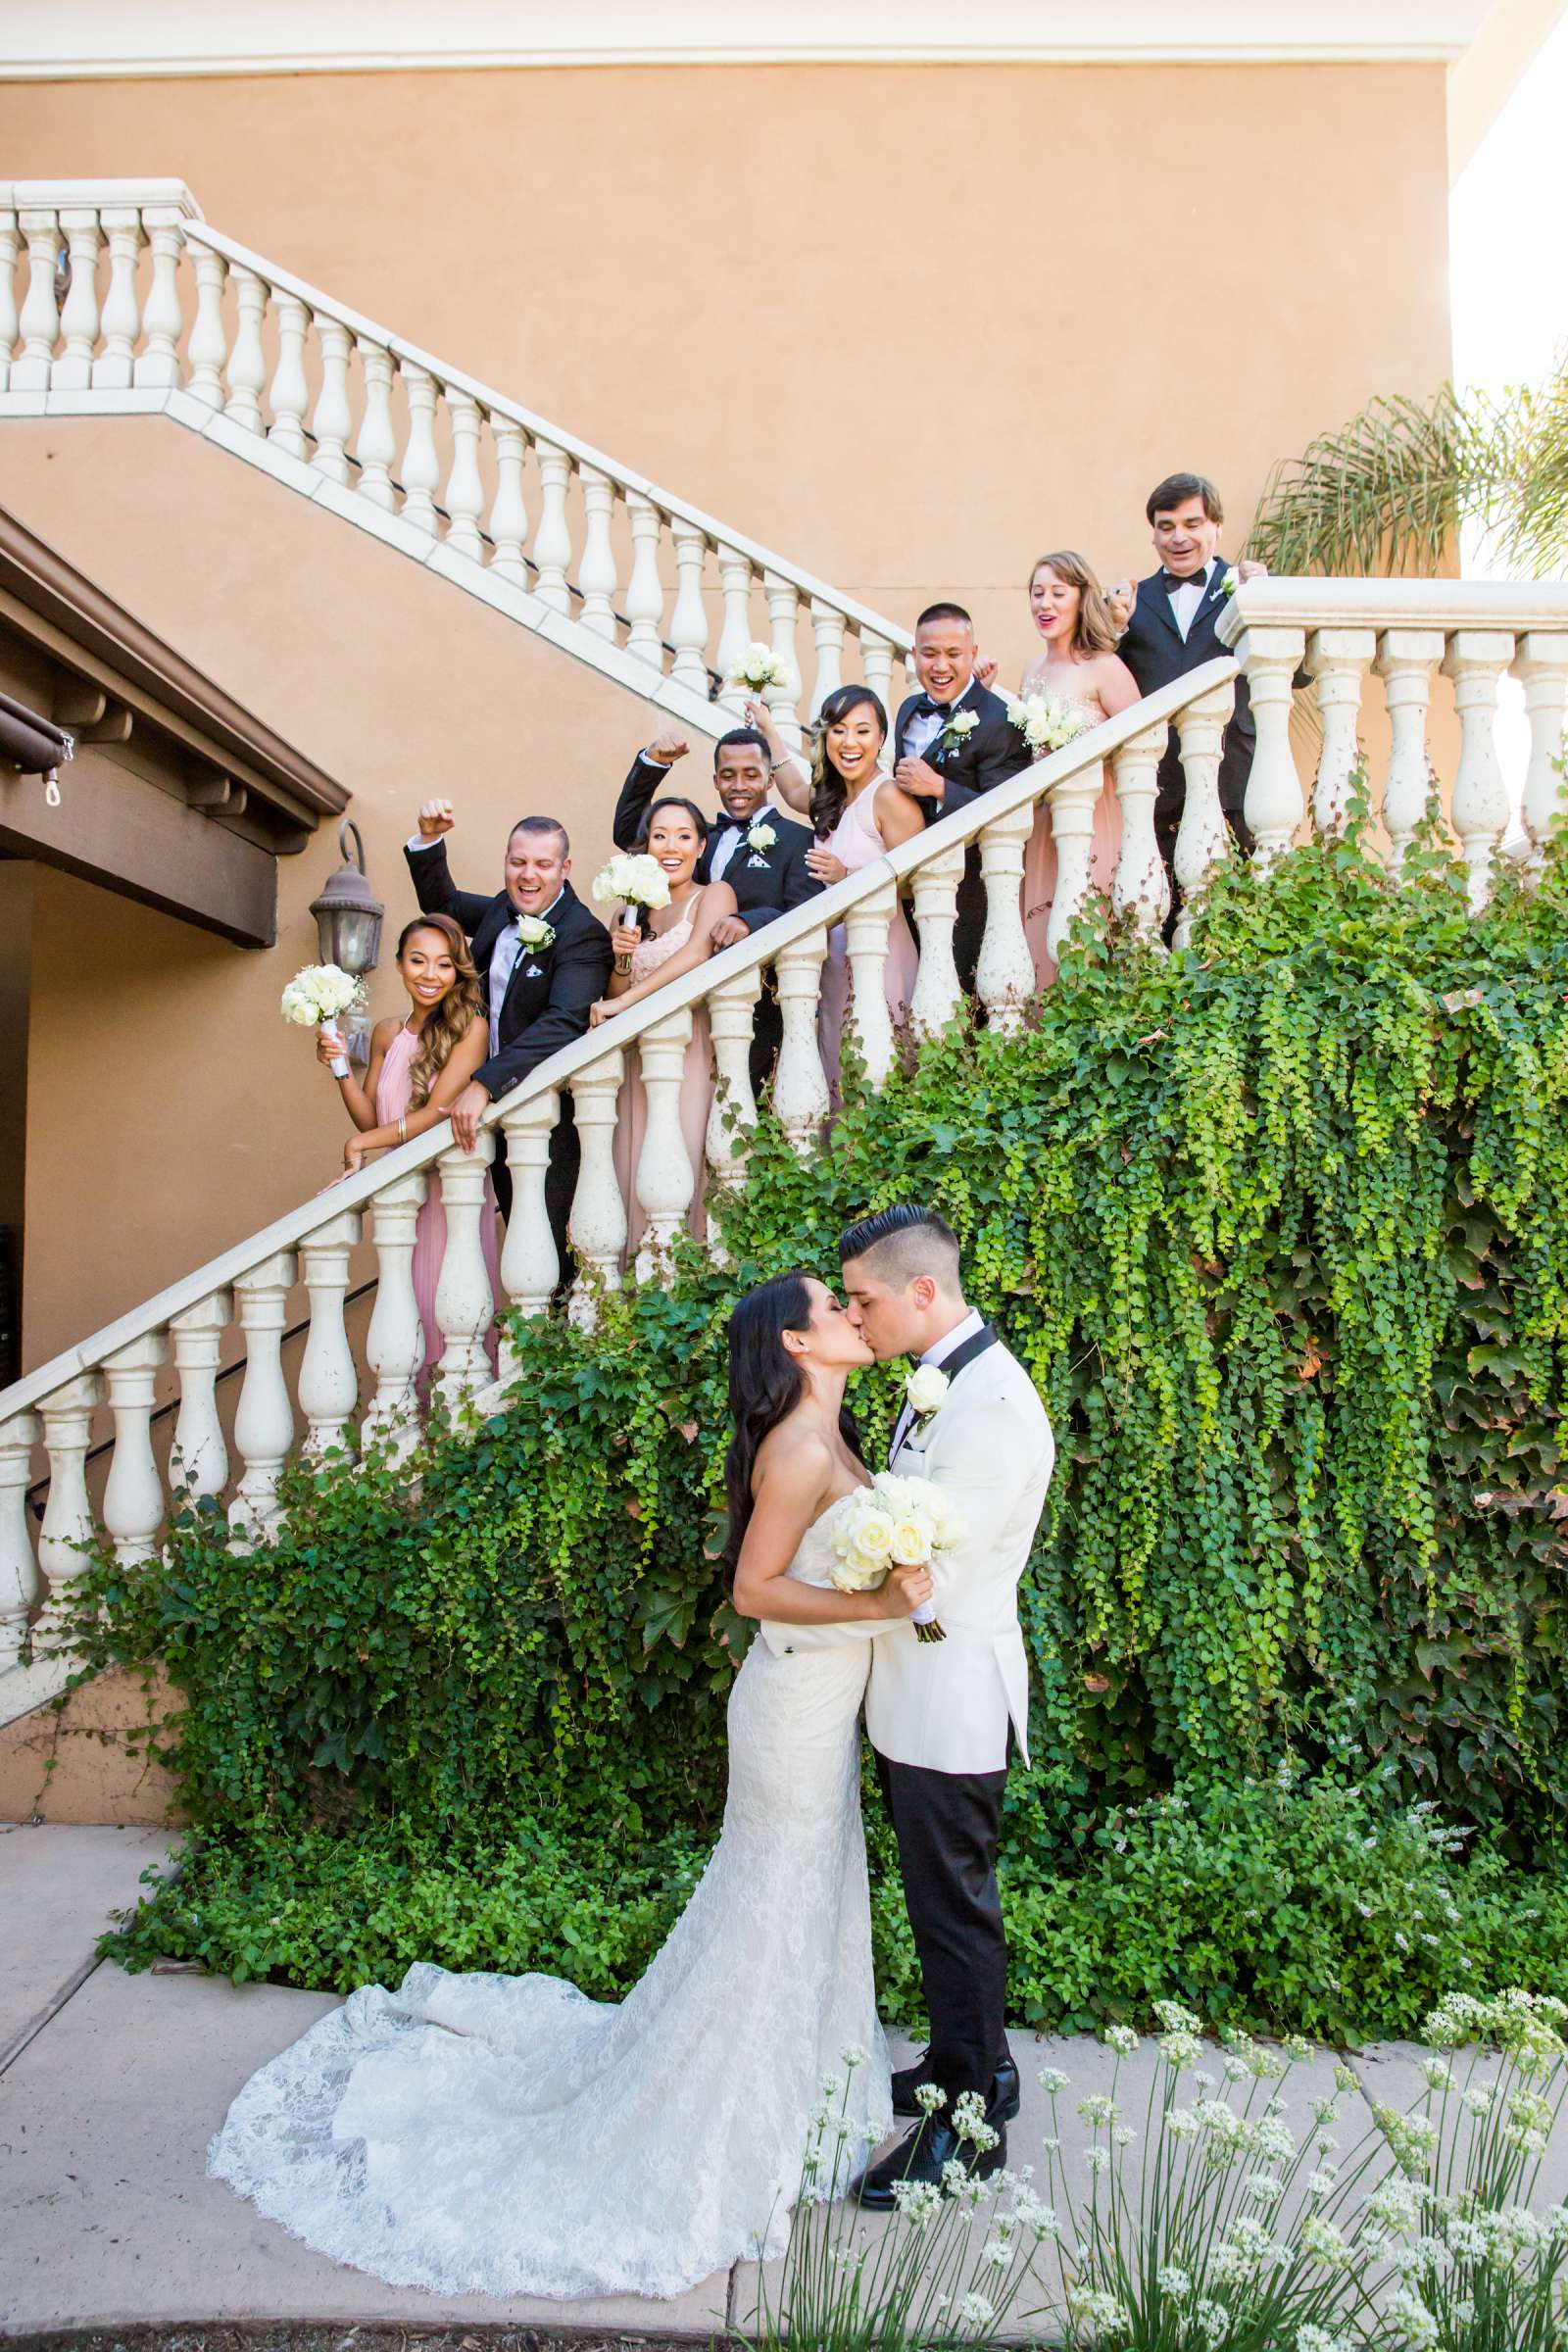 Wilson Creek Winery Wedding, Quynhnhi and Jacob Wedding Photo #8 by True Photography